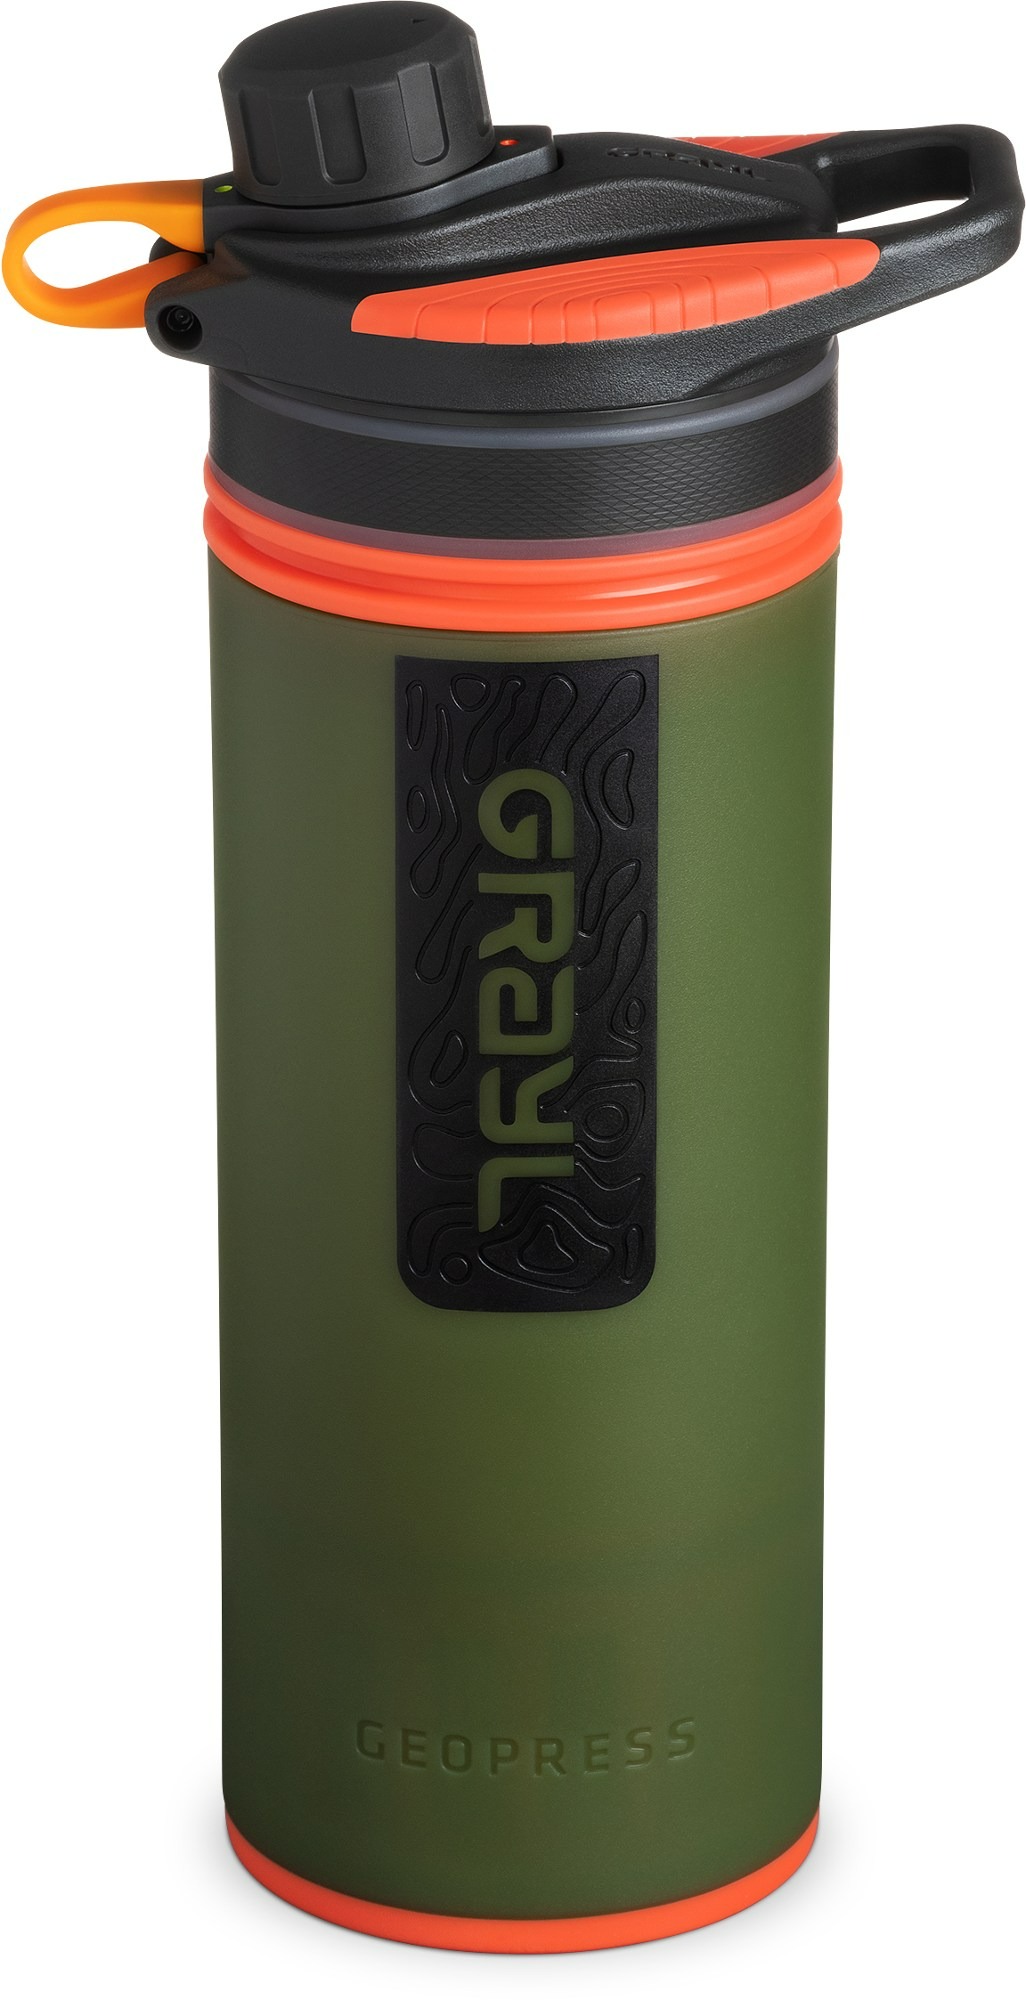 Grayl Geopress water purifier - $59.79